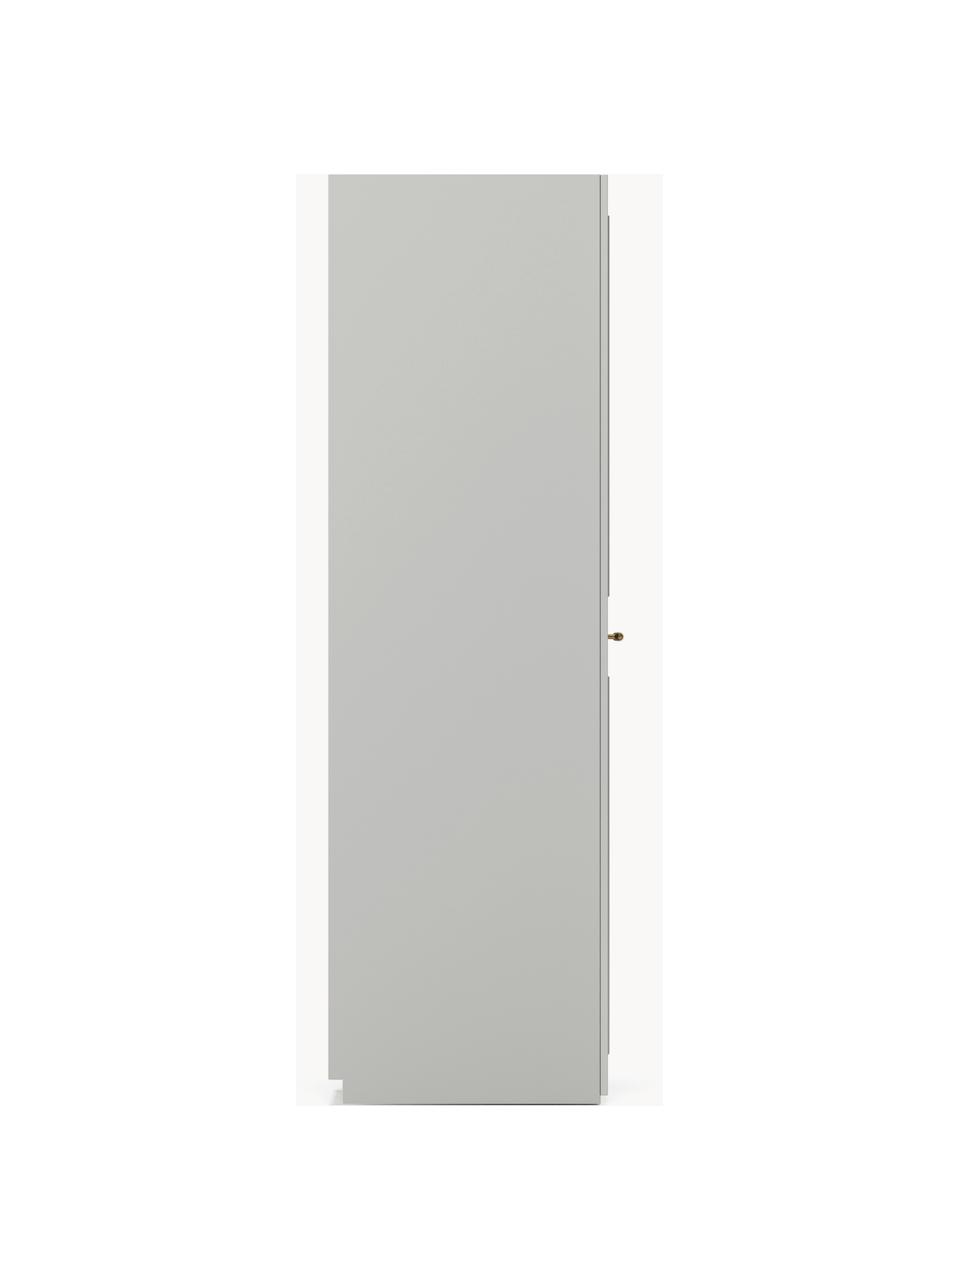 Modulární skříň s otočnými dveřmi Charlotte, šířka 200 cm, více variant, Šedá, Interiér Basic, Š 200 x V 200 cm